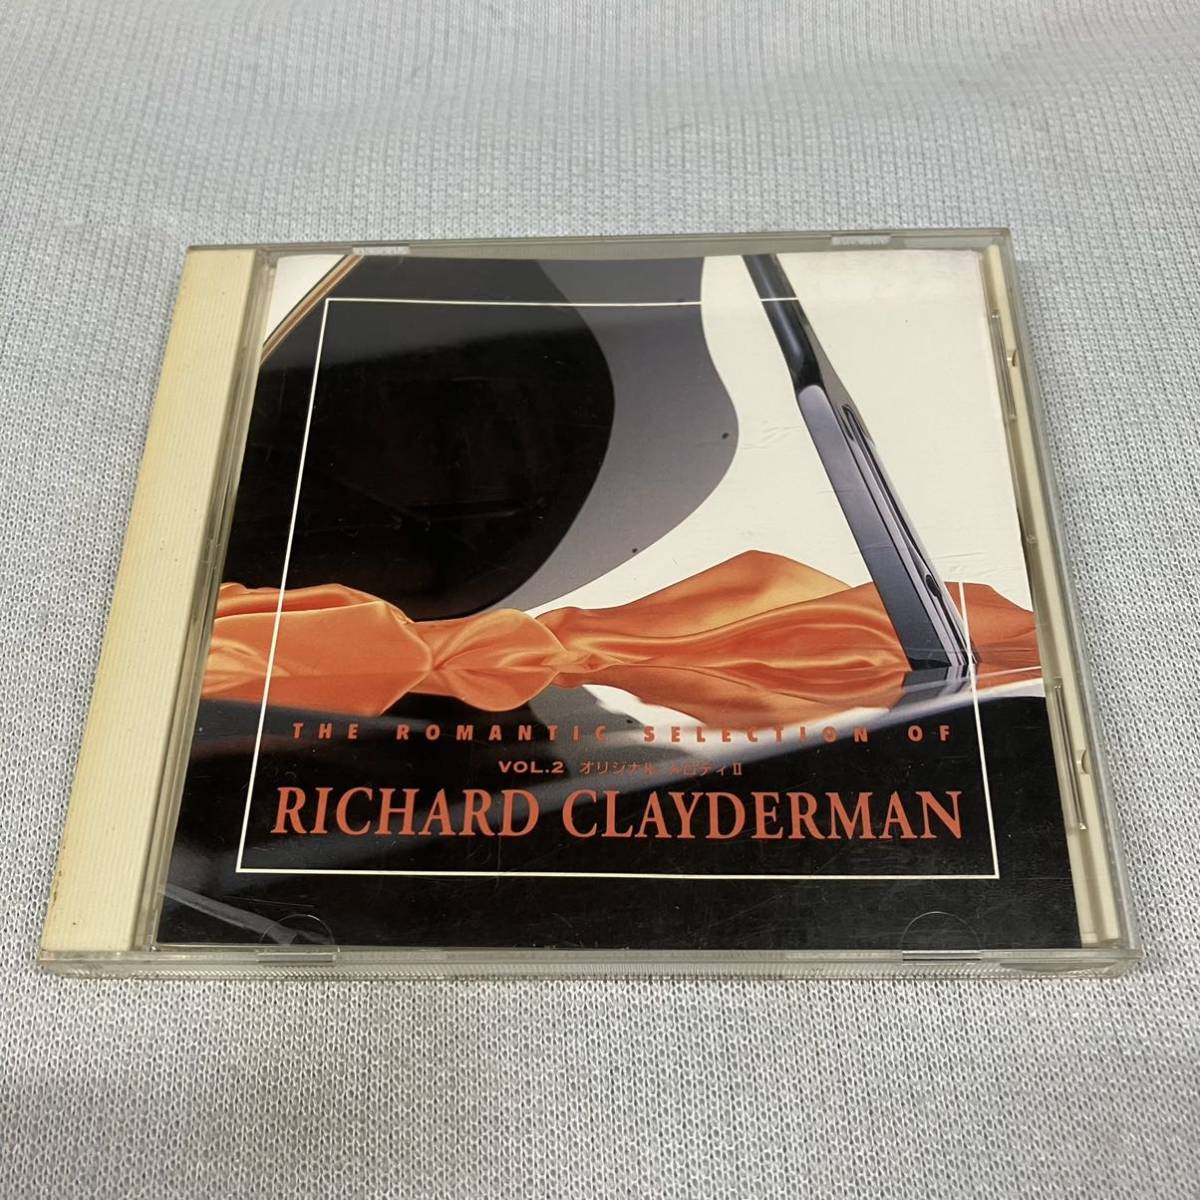 CD 中古品 THE ROMANTIC SELECTION OF VOL.2 RICHARD CLAYDERMAN 'D_画像1